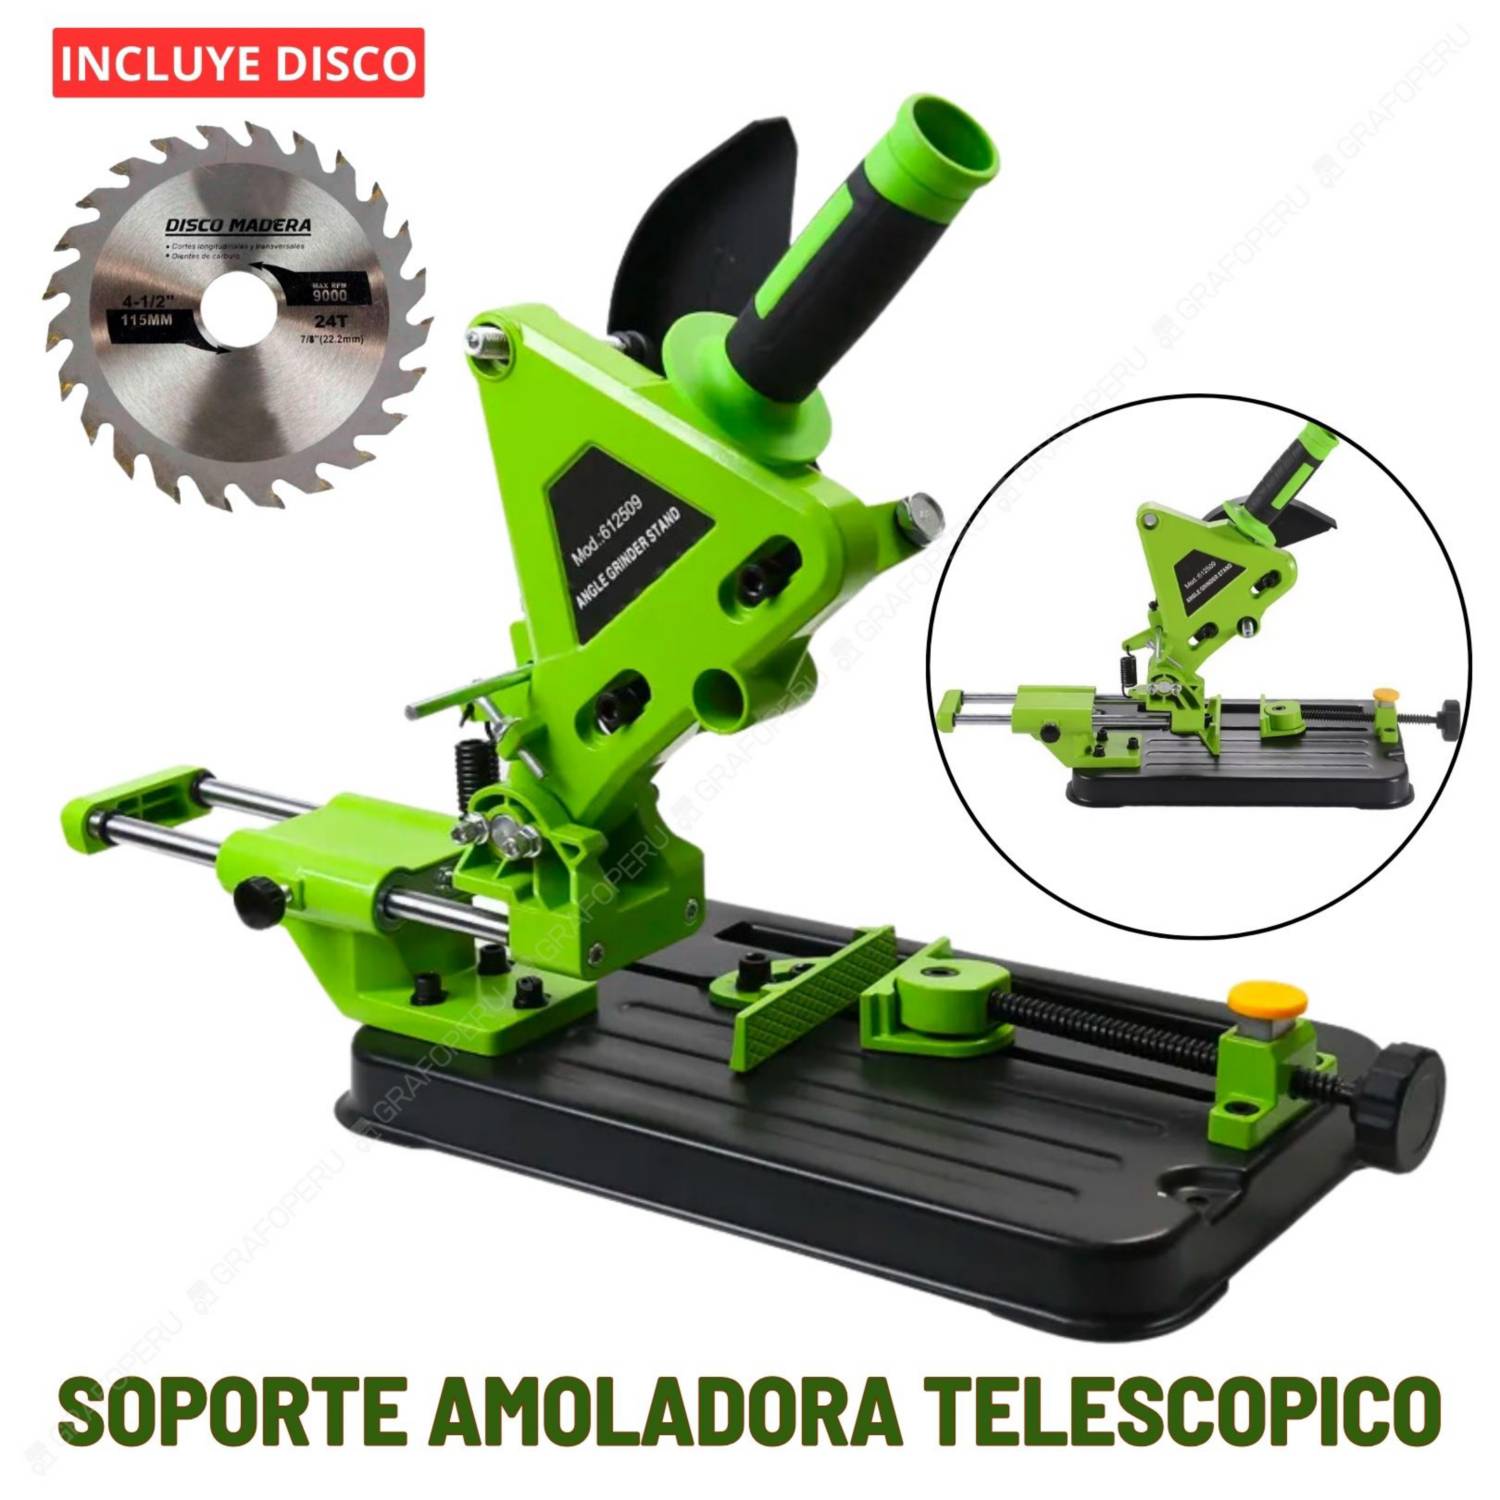 Soporte Amoladora Telescopica XTD Esmeril Incluye Disco Madera XTD